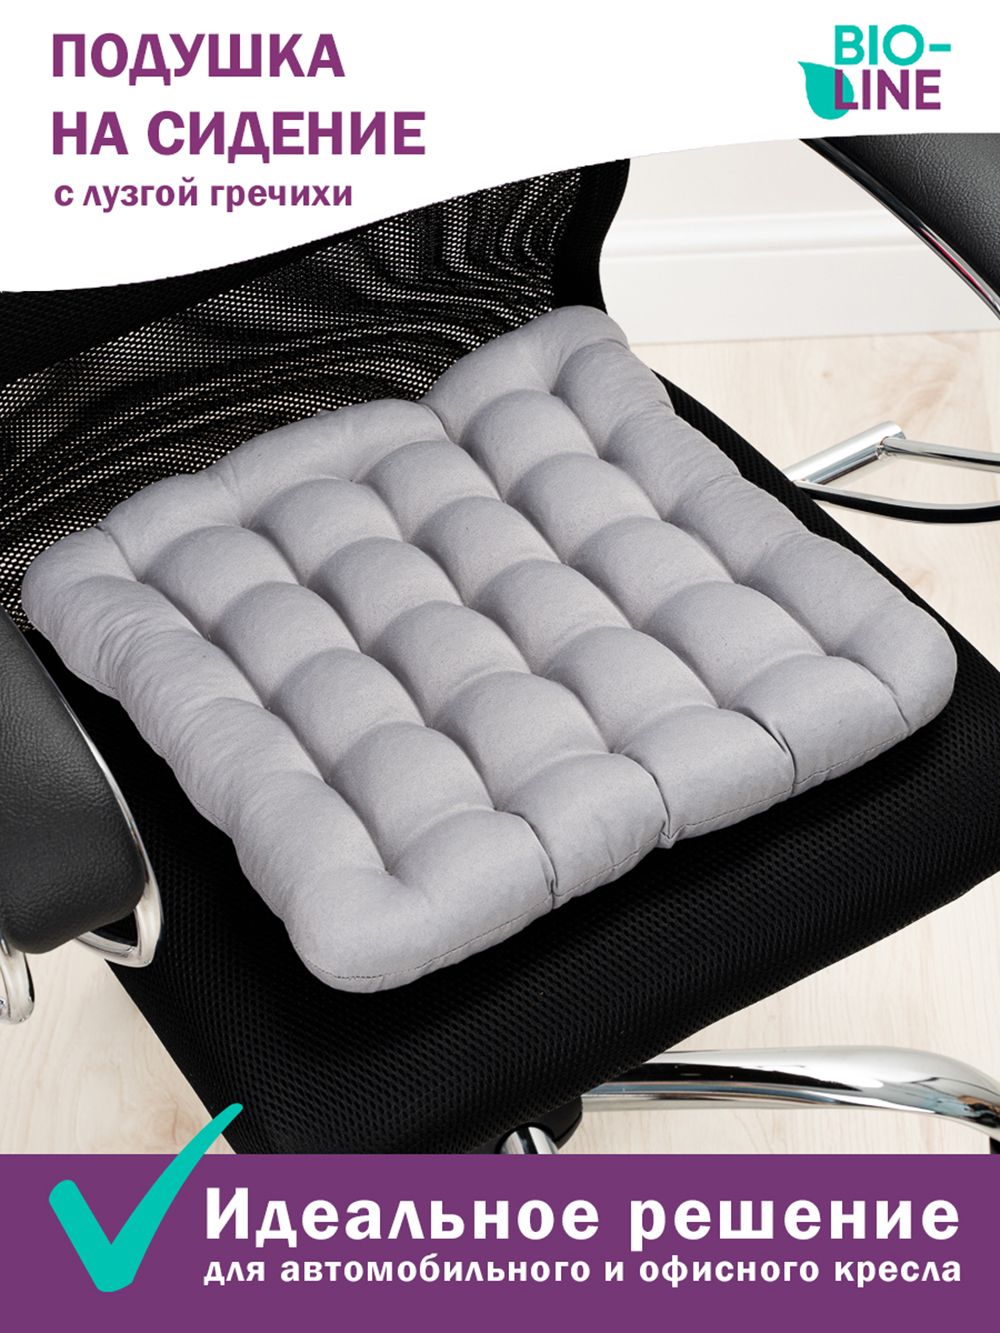 Подушка на стул Bio-Line с гречневой лузгой PSG25 - светло-серый